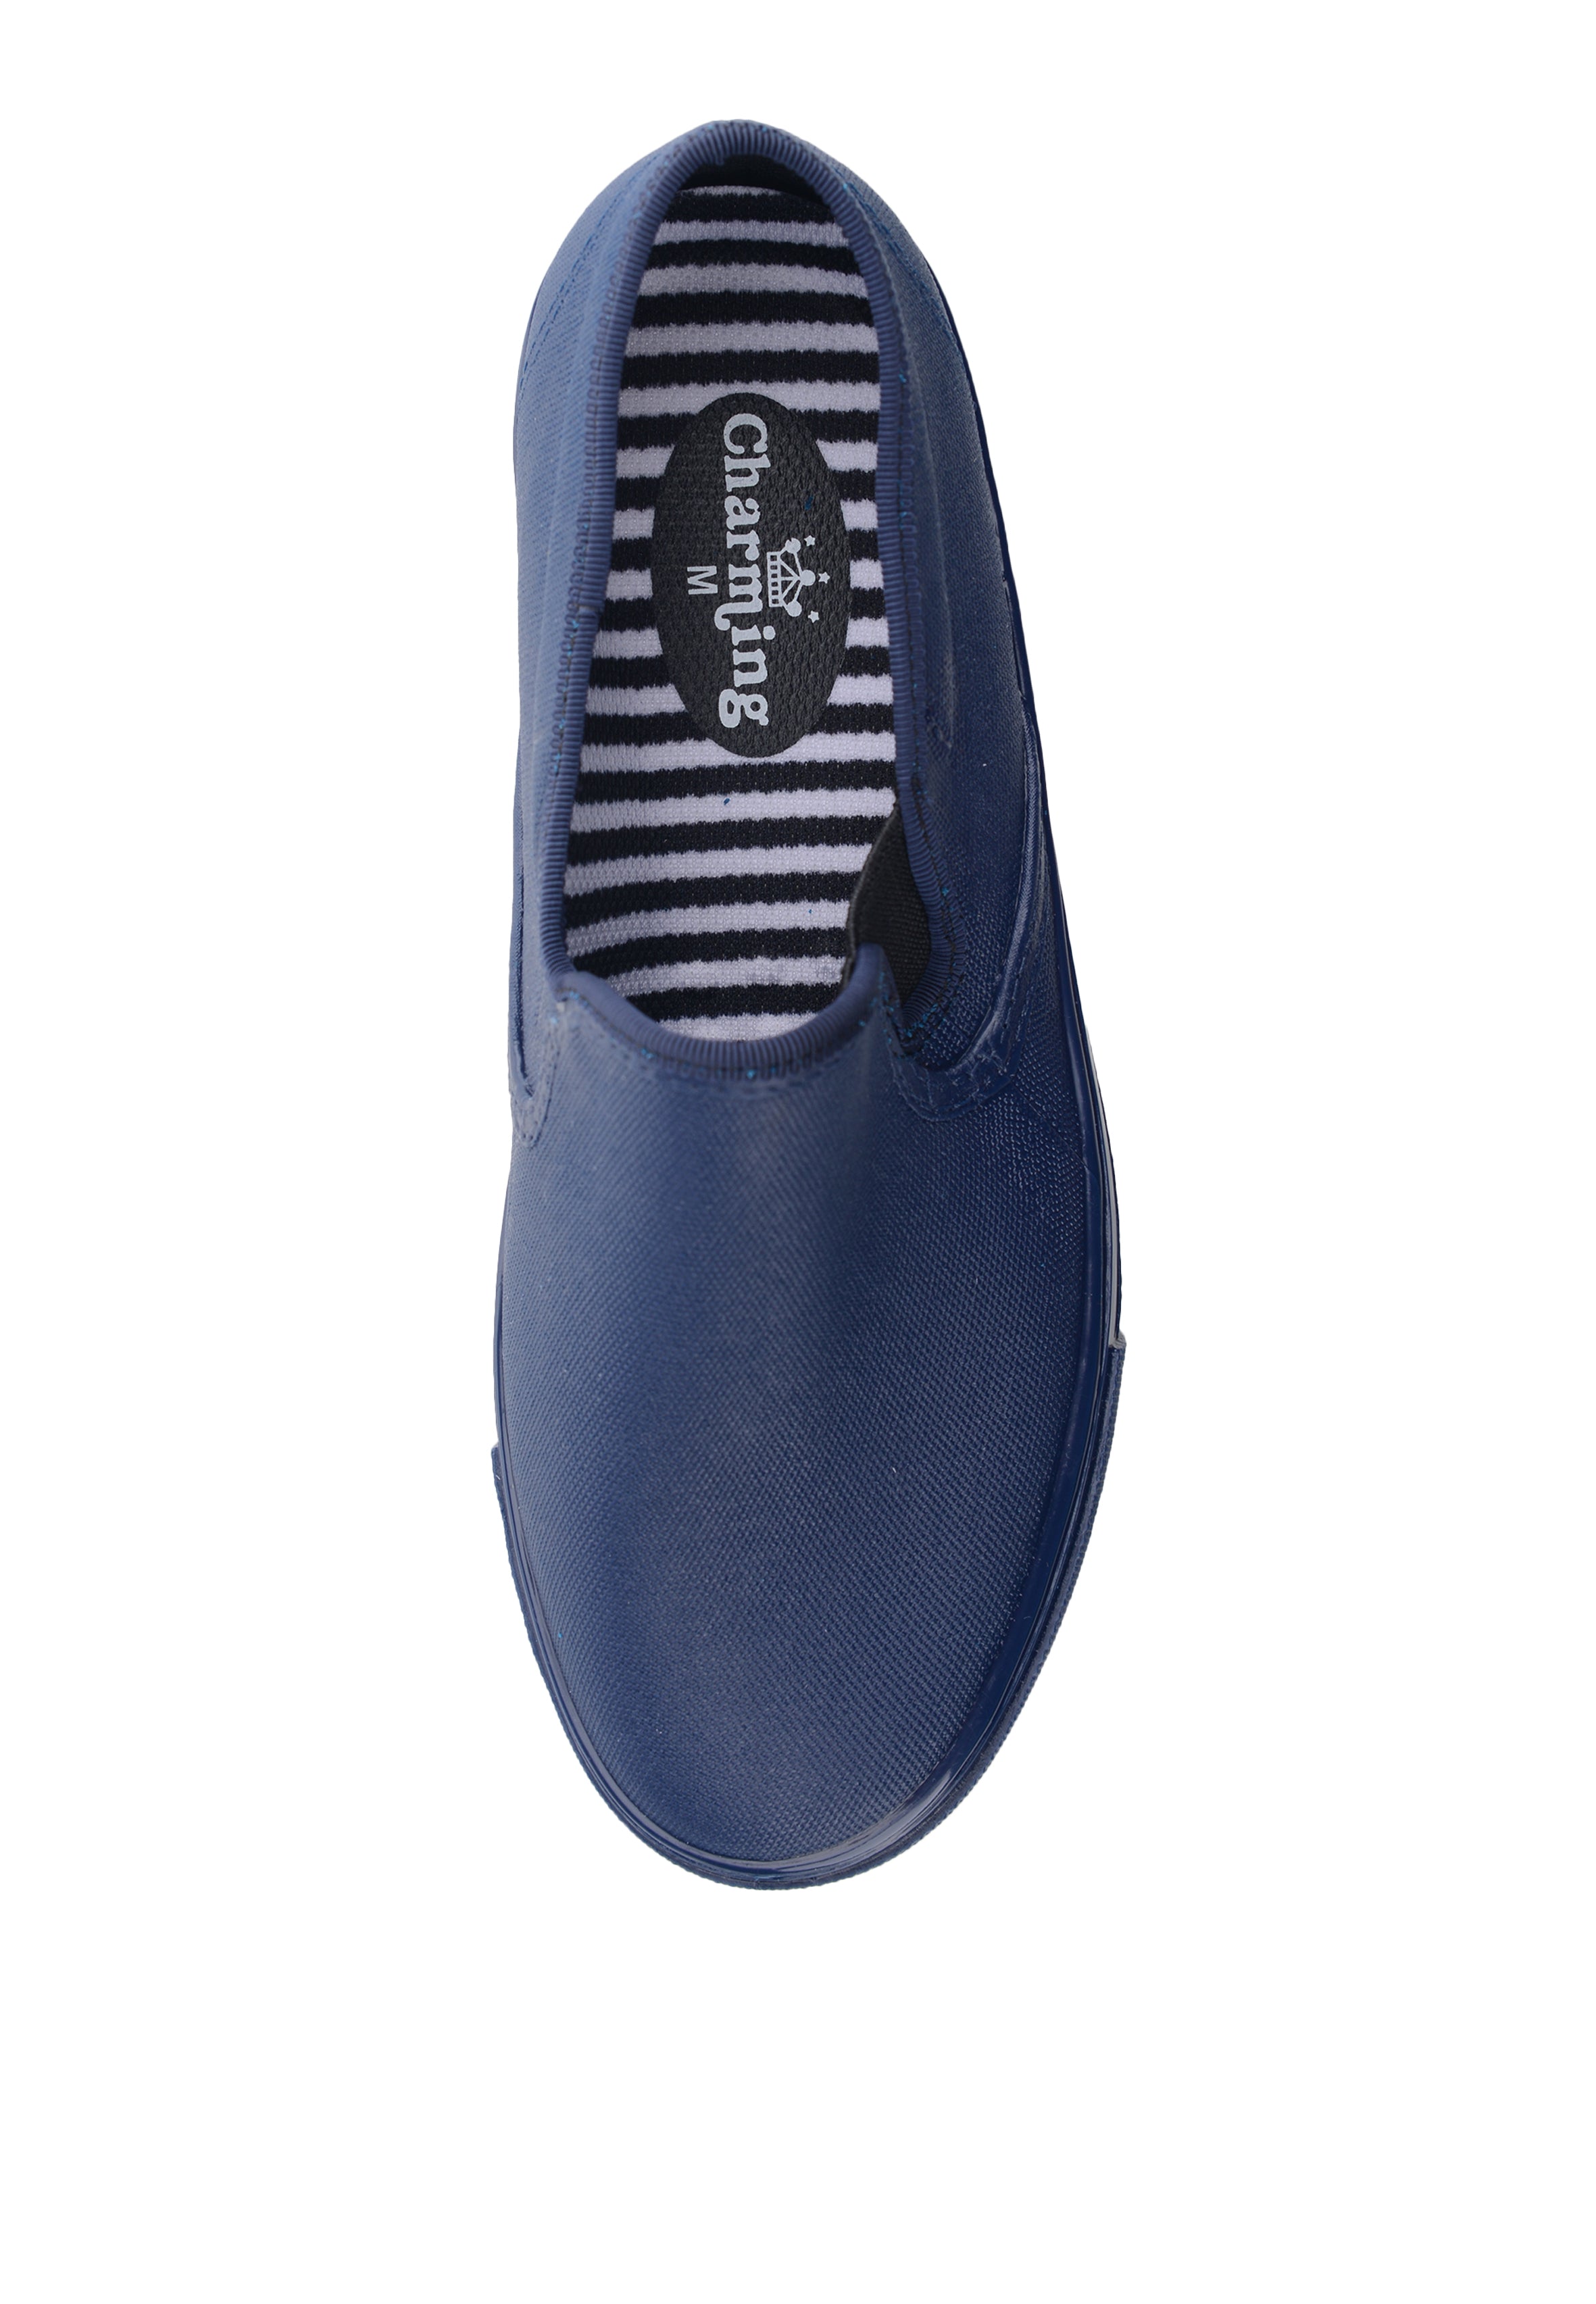 2500 Classic Rain Shoes (Japan)-Charming-BE-JP Size-2: 35S-偉豐鞋 WELL SHOE HK-Well Shoe-偉豐鞋-偉豐網-荃灣鞋店-Functional shoes-Hong Kong Tsuen Wan Shoe Store-Tai Wan Shoe-Japan Shoe-高品質功能鞋-台灣進口鞋-日本進口鞋-High-quality shoes-鞋類配件-荃灣進口鞋-香港鞋店-優質鞋類產品-水靴-帆布鞋-廚師鞋-香港鞋品牌-Hong Kong Shoes brand-長者鞋-Hong Kong Rain Boots-Kitchen shoes-Cruthes-Slipper-Well Shoe Hong Kong-Anello-Arriba-休閒鞋-舒適鞋-健康鞋-皮鞋-Healthy shoes-Leather shoes-Hiking shoes